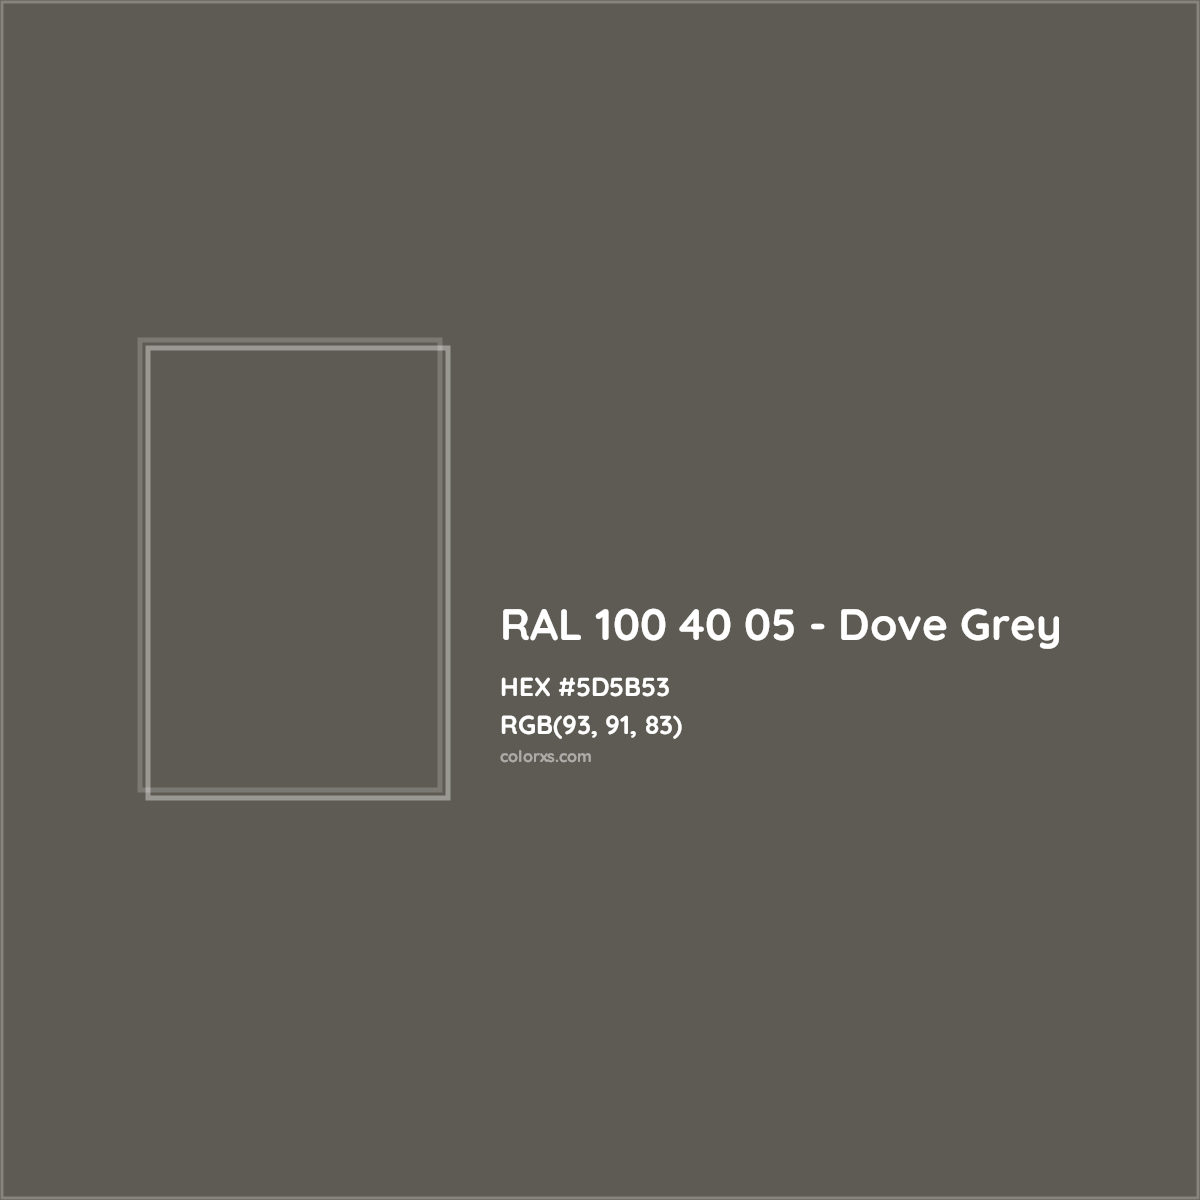 HEX #5D5B53 RAL 100 40 05 - Dove Grey CMS RAL Design - Color Code